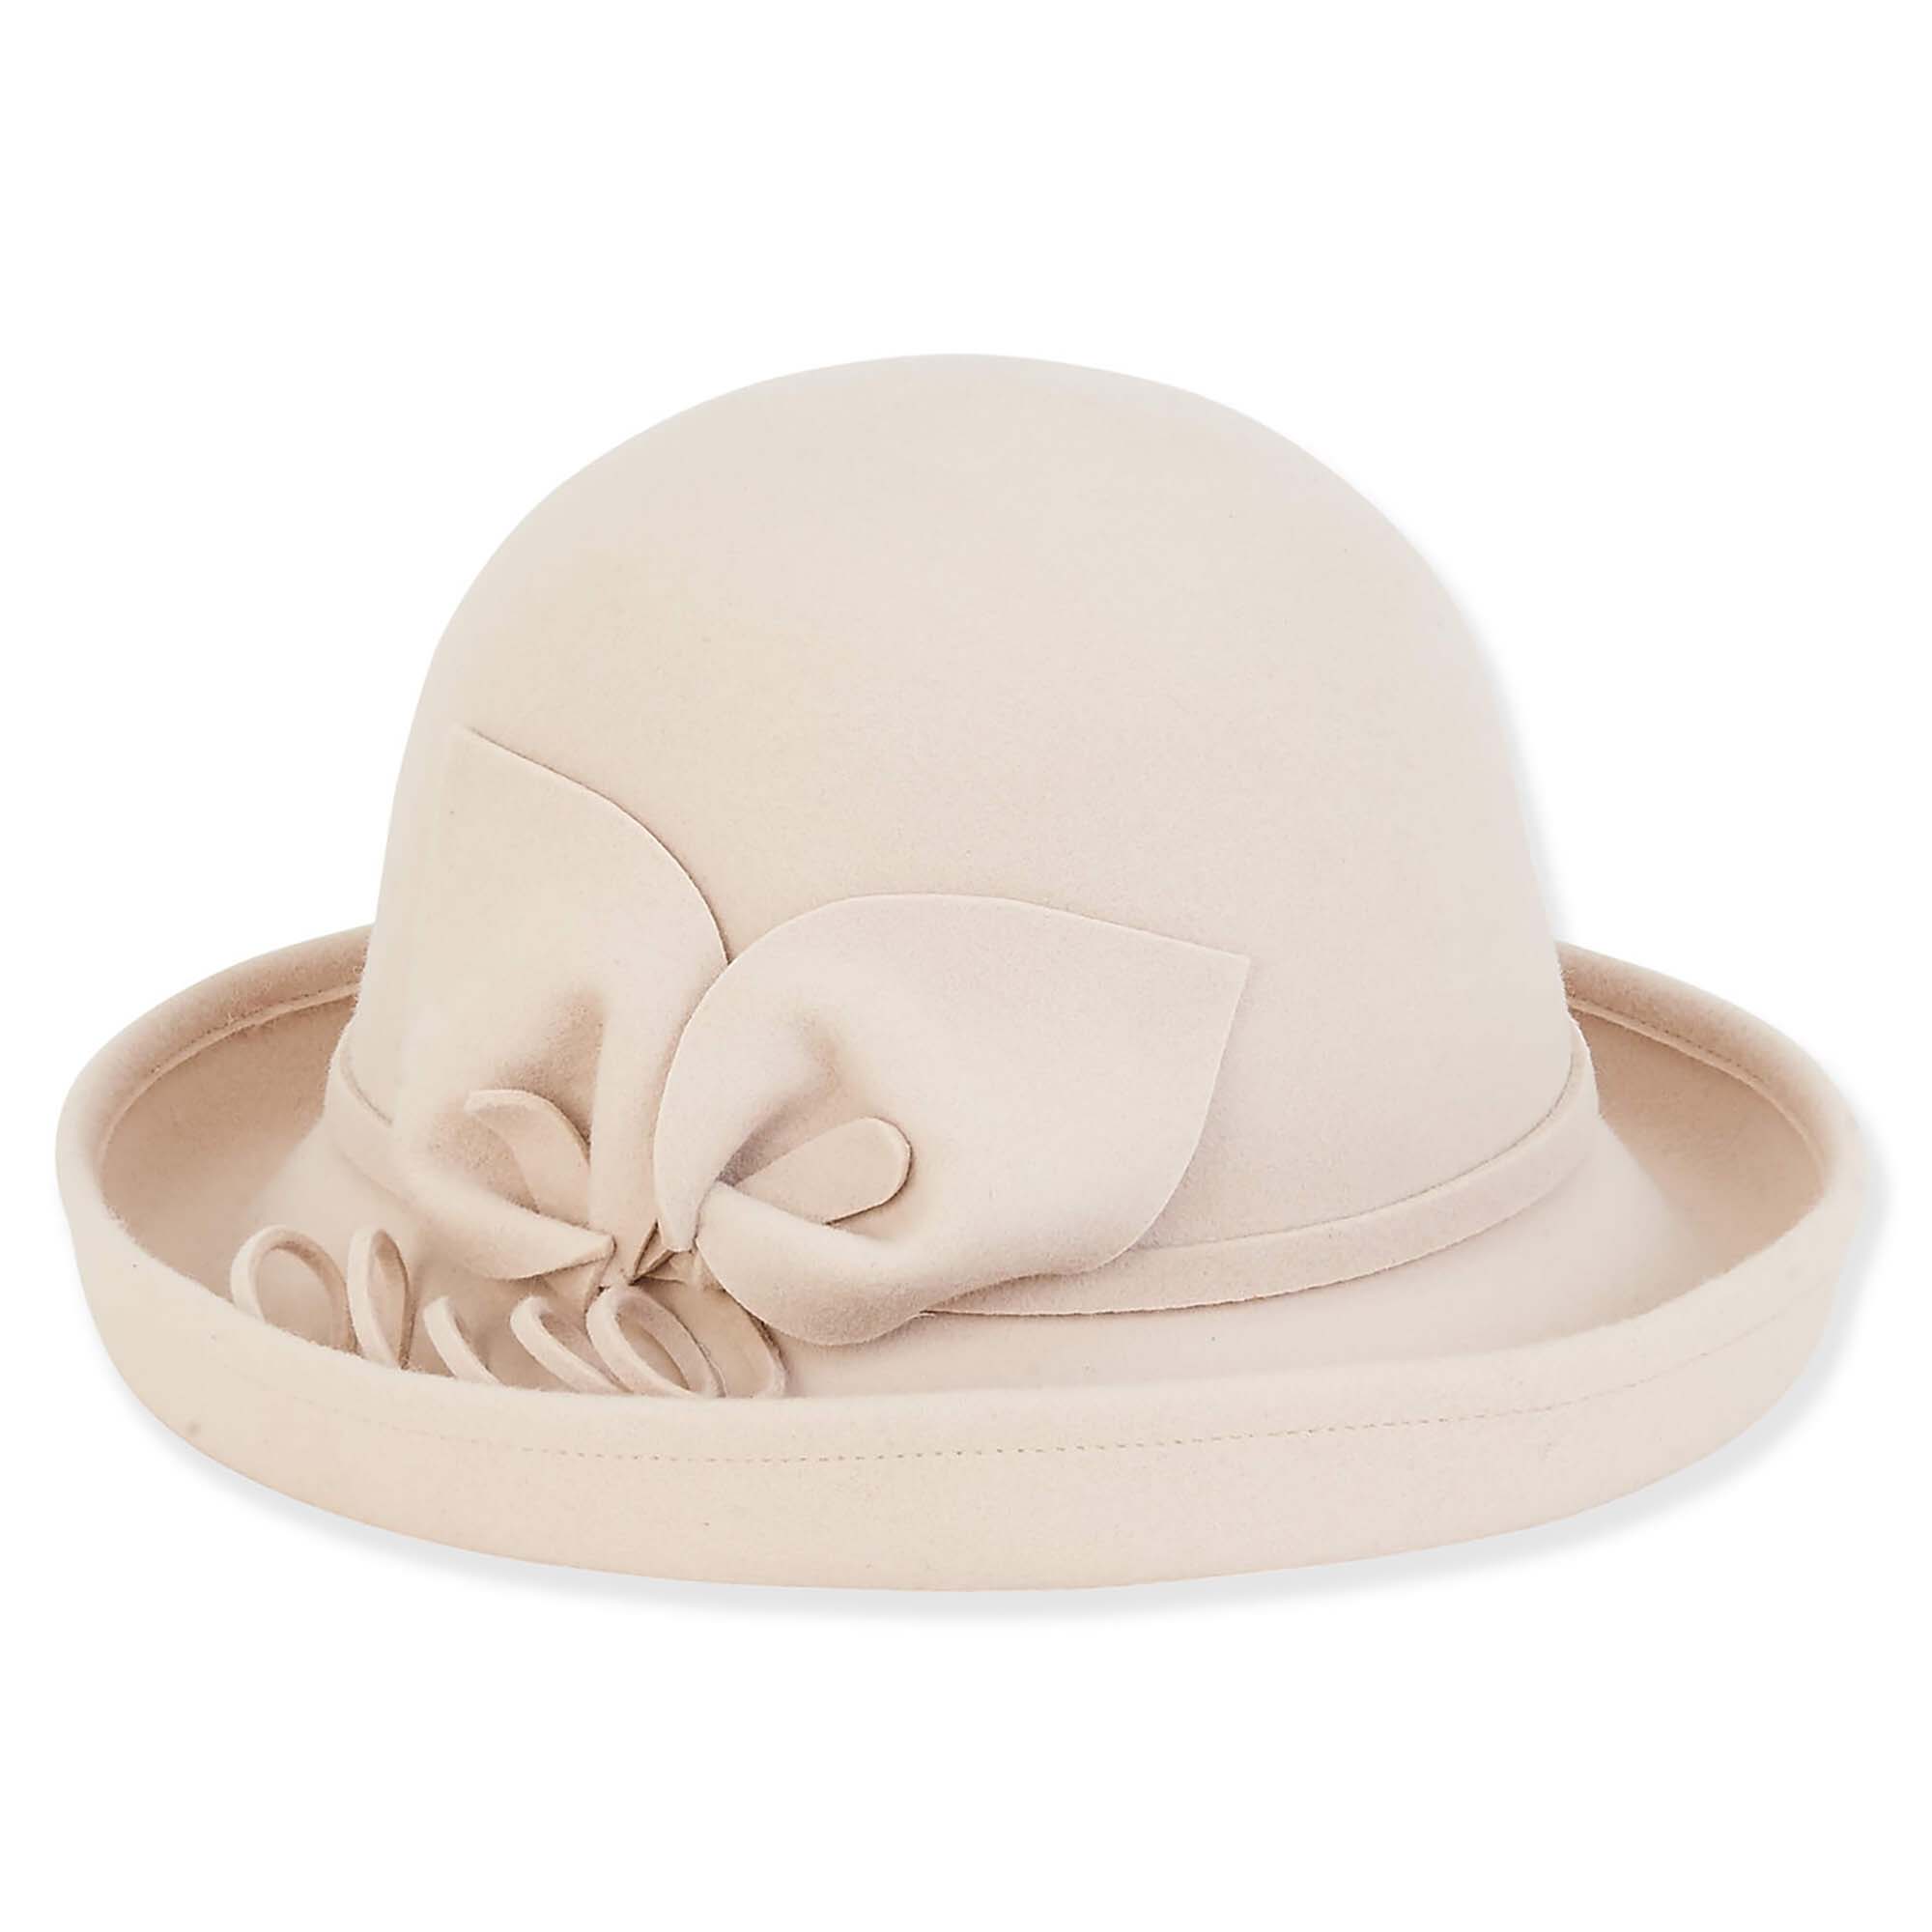 Adora® Wool Hat - Wool Felt Up Brim Hat with Floral Trim Cloche Adora Hats AD1418A Beige OS 